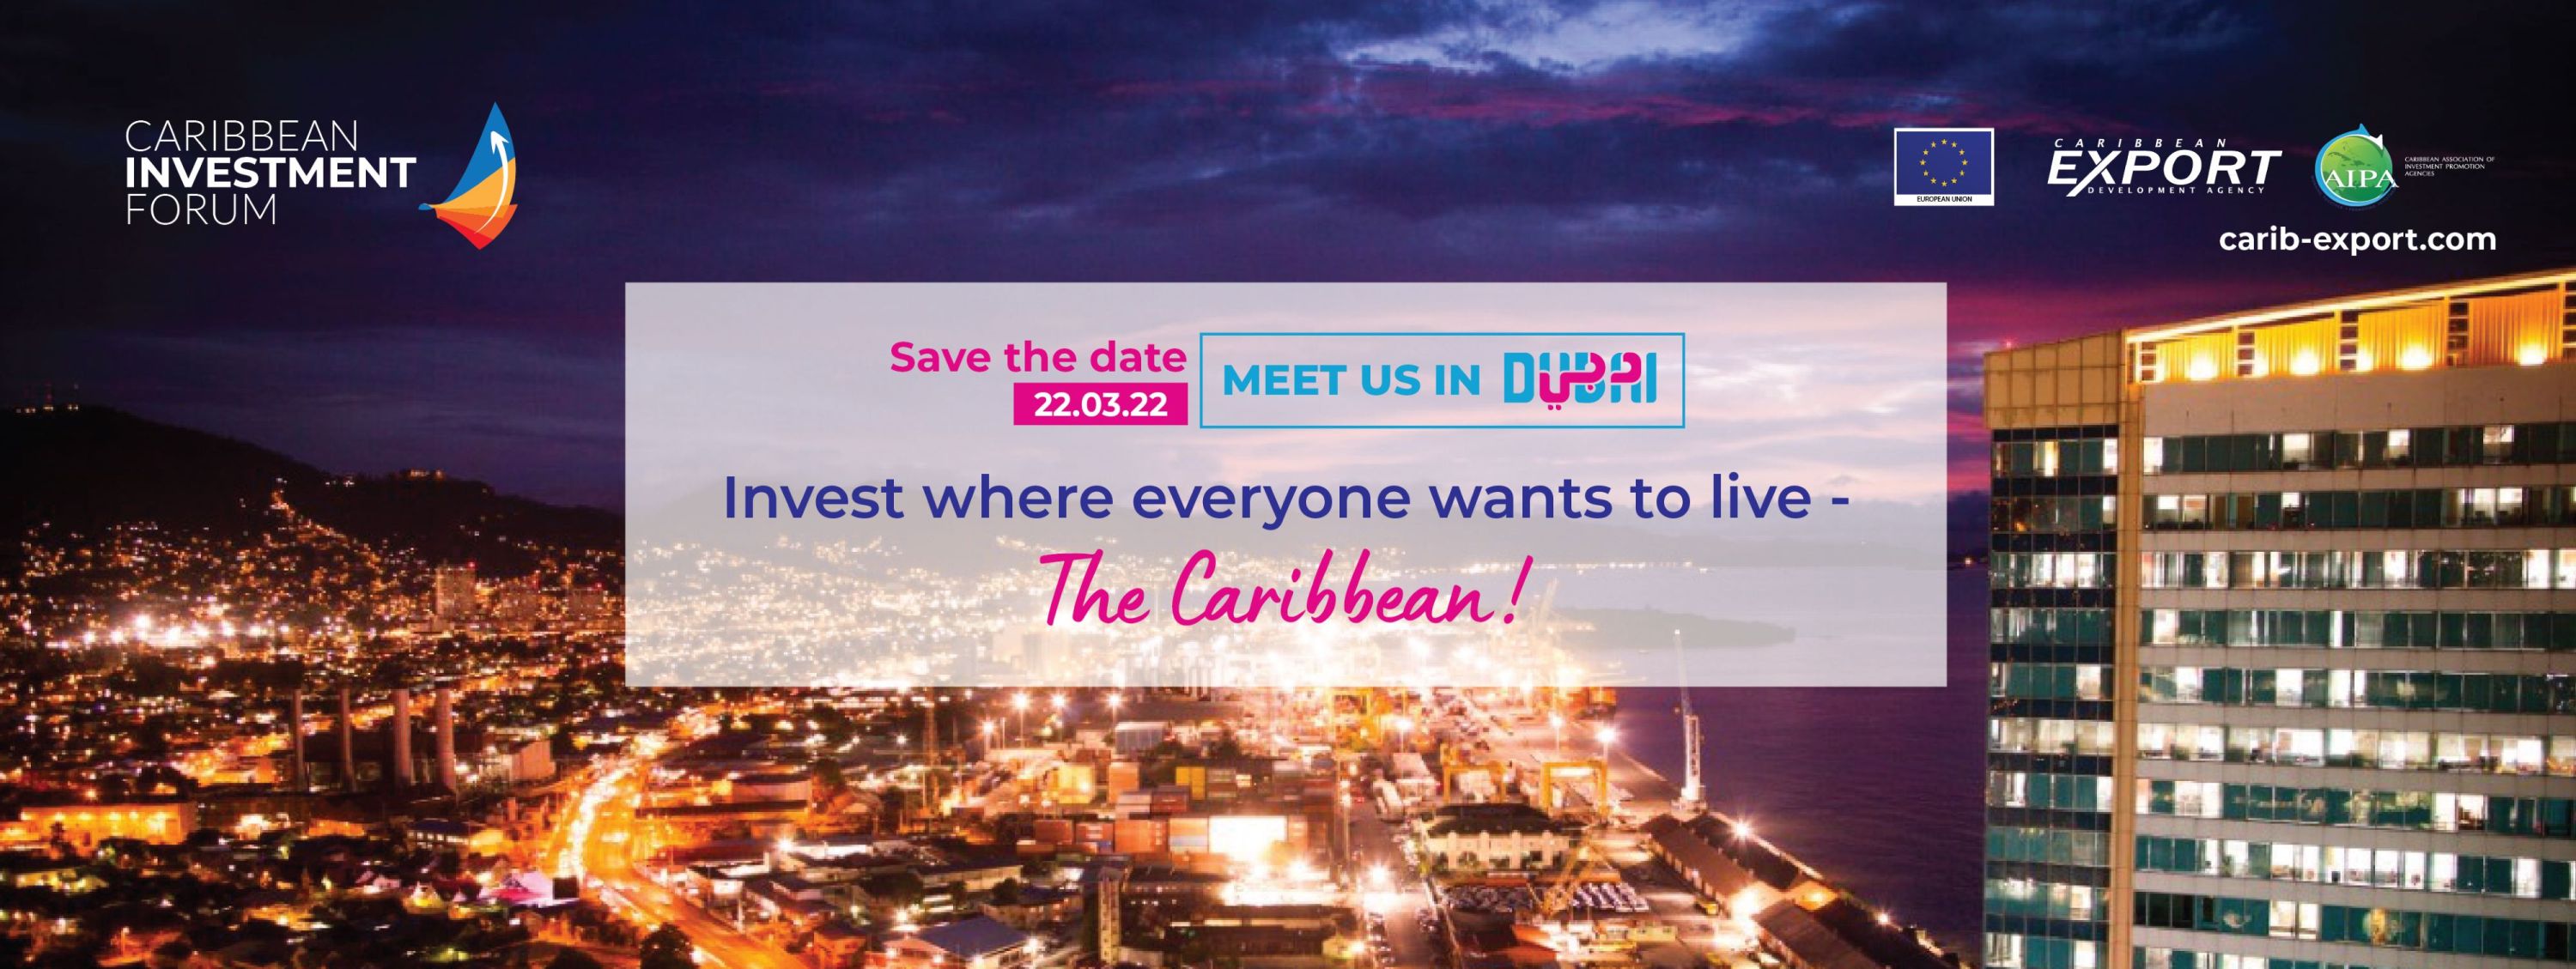 CAIPA To Host Caribbean Investment Forum in Dubai Photo